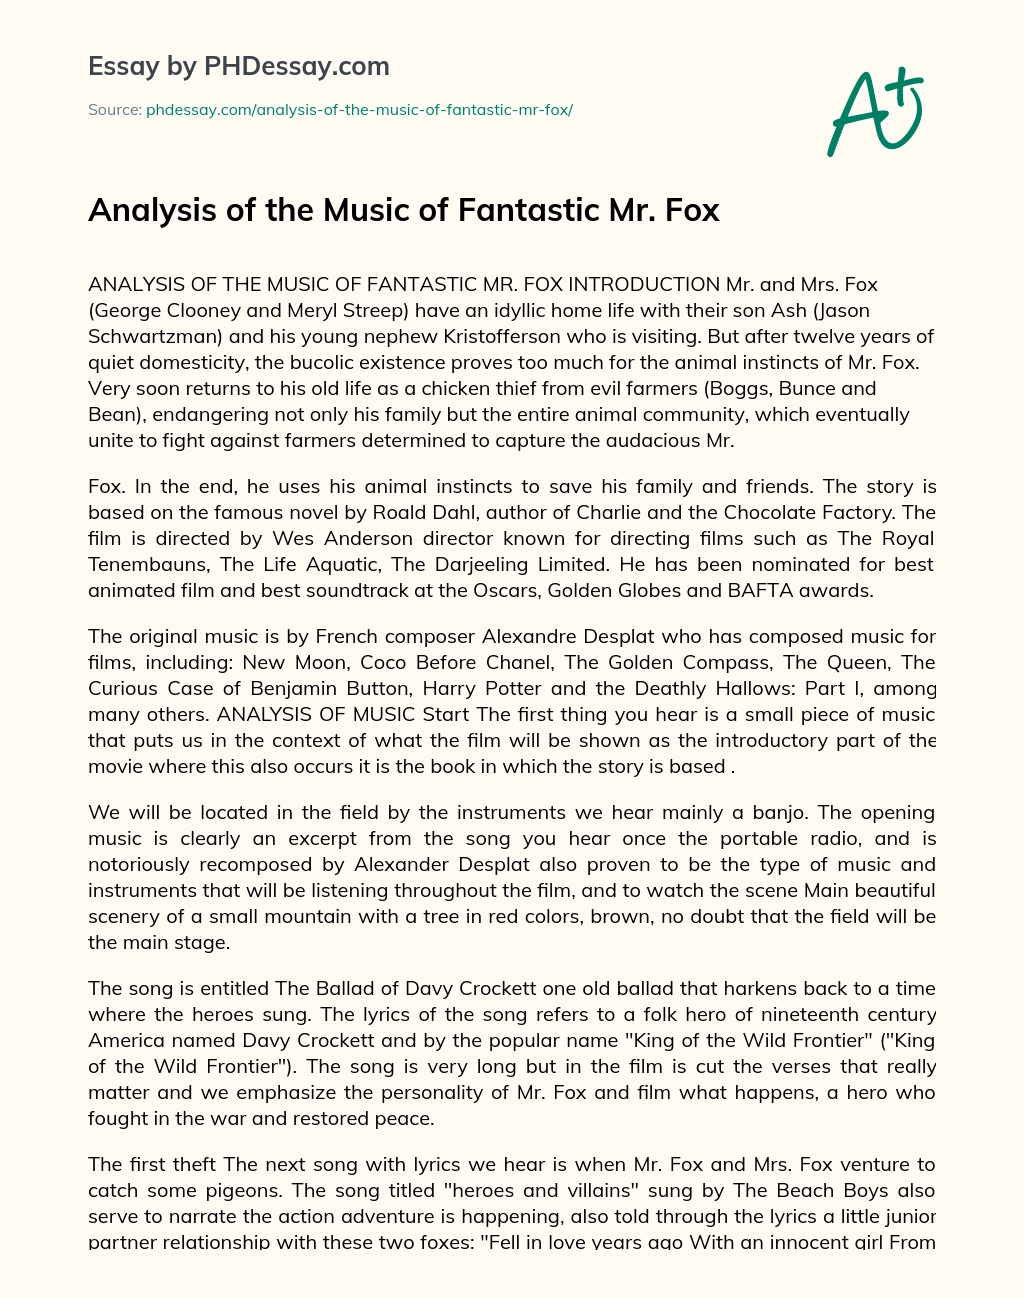 Analysis of the Music of Fantastic Mr. Fox essay